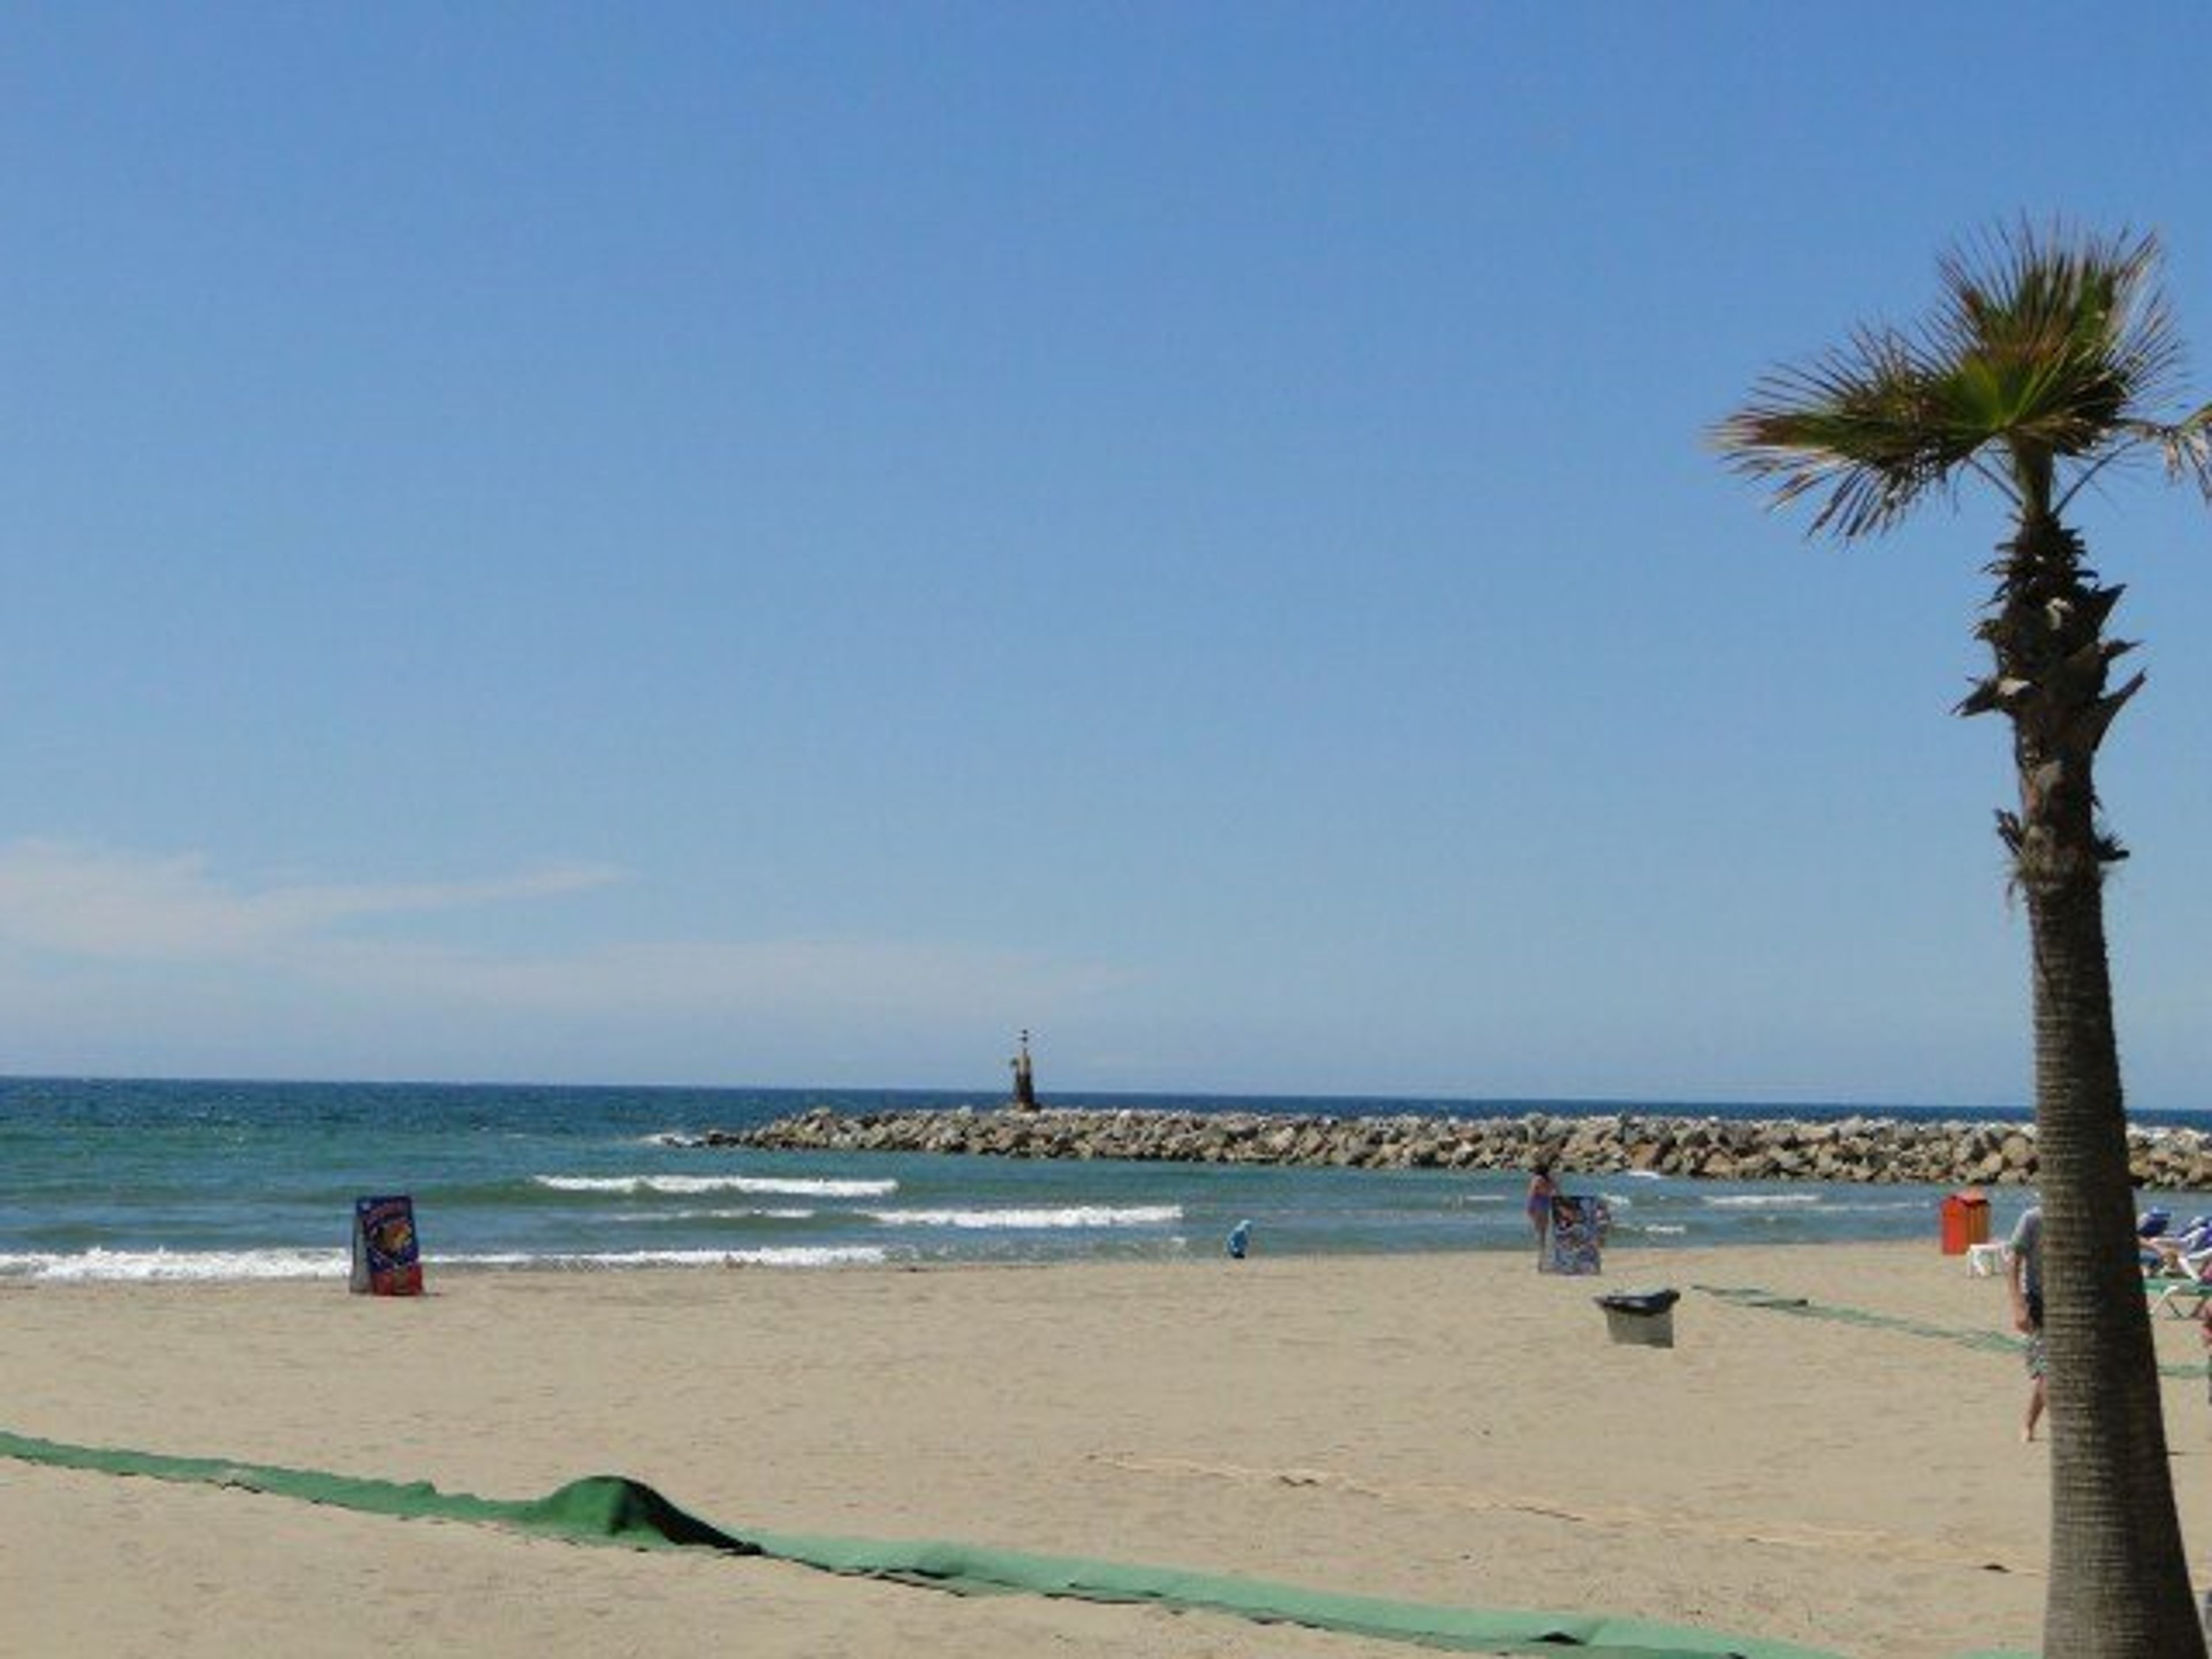 Nearest beach in Benalmádena, approx 800 metres from Casa Vela. 